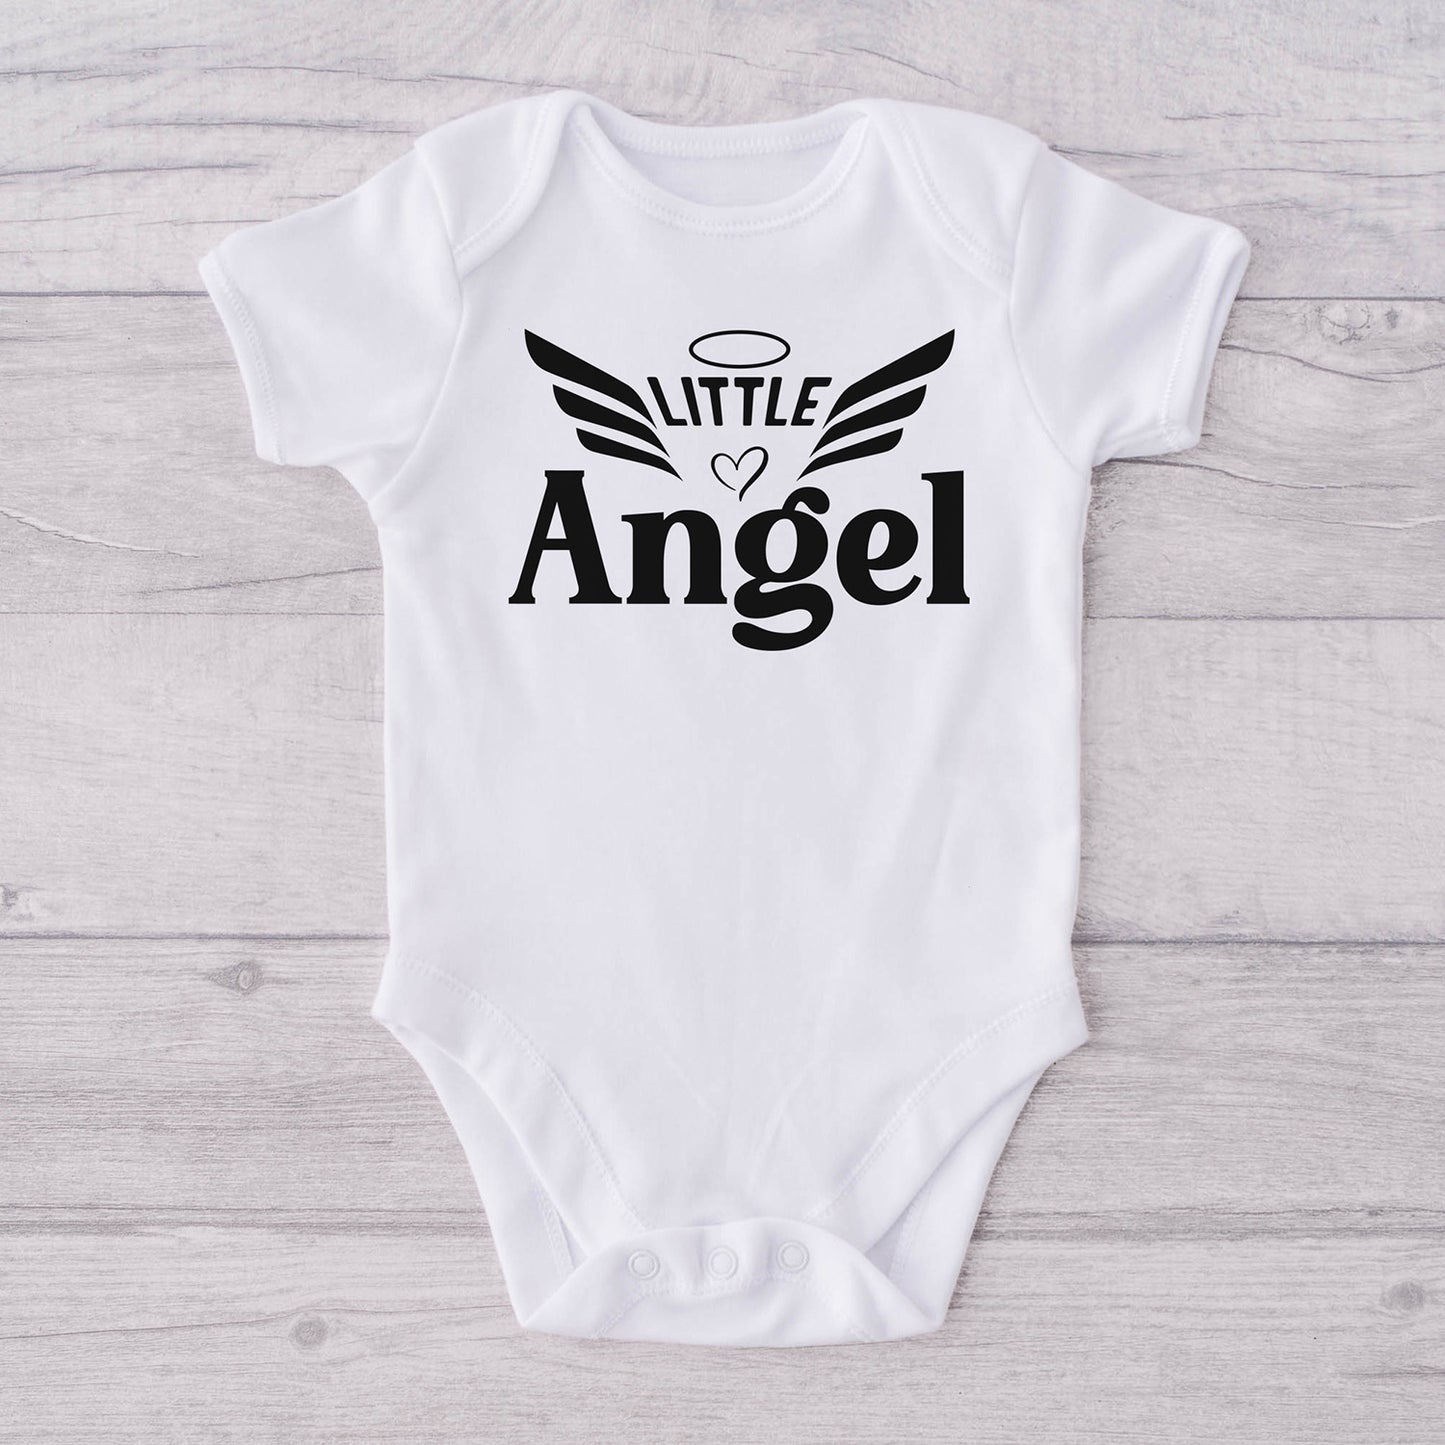 "Little Angel" Graphic